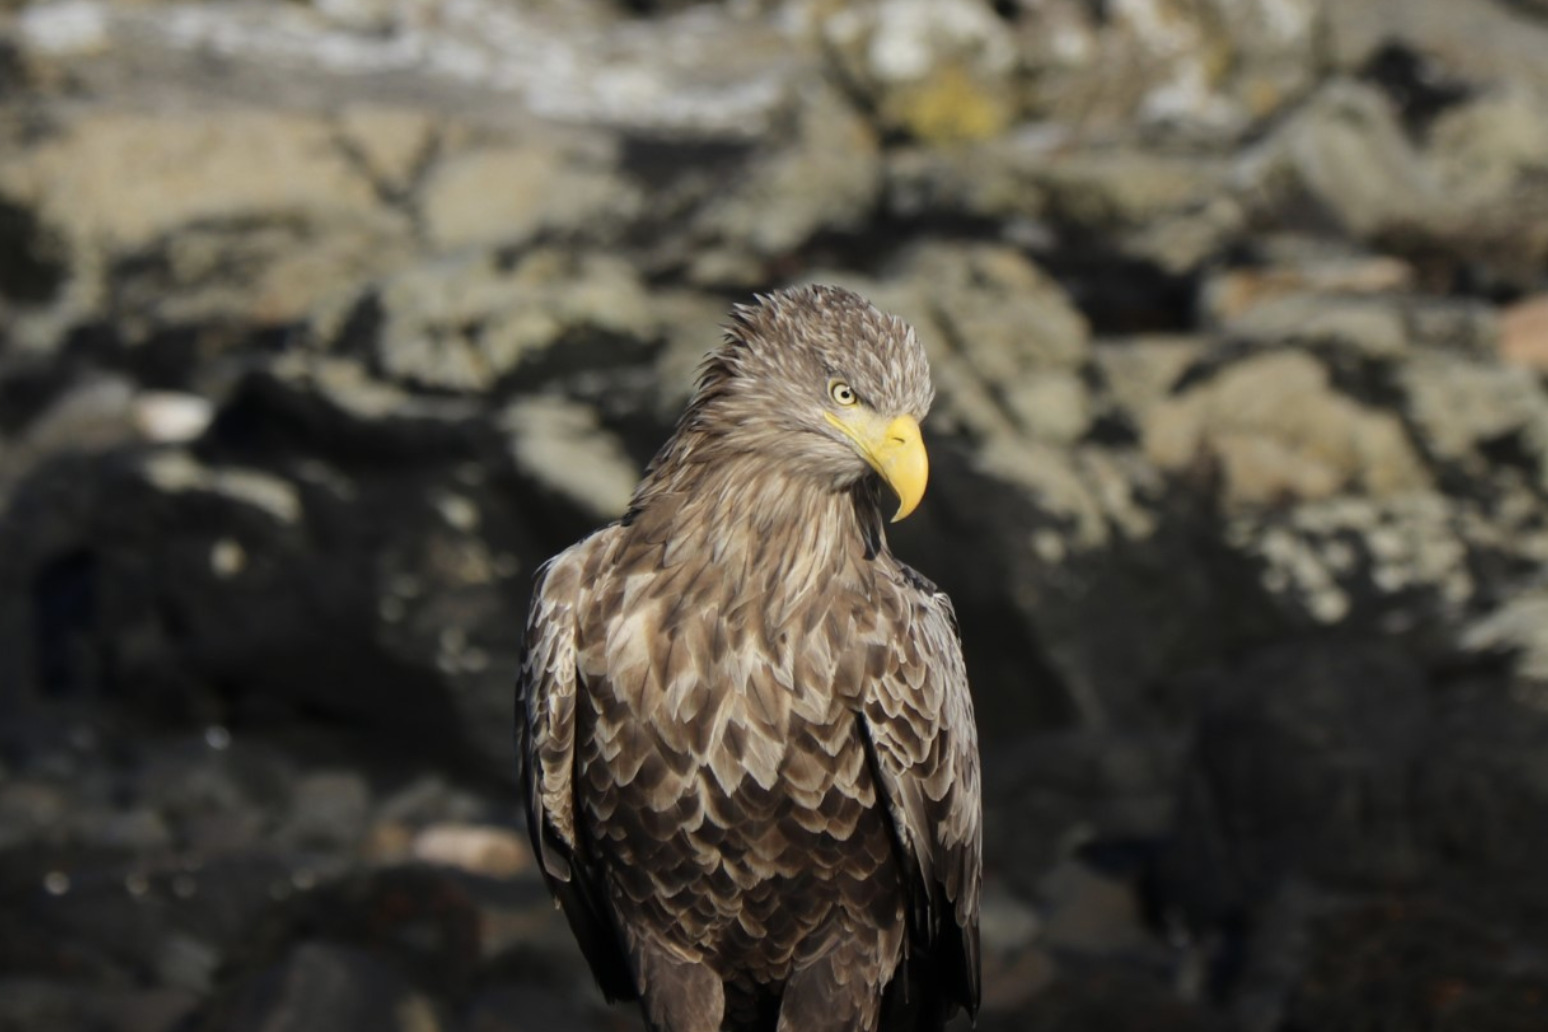 Sea eagle tourism generates economic benefit for Scottish island 